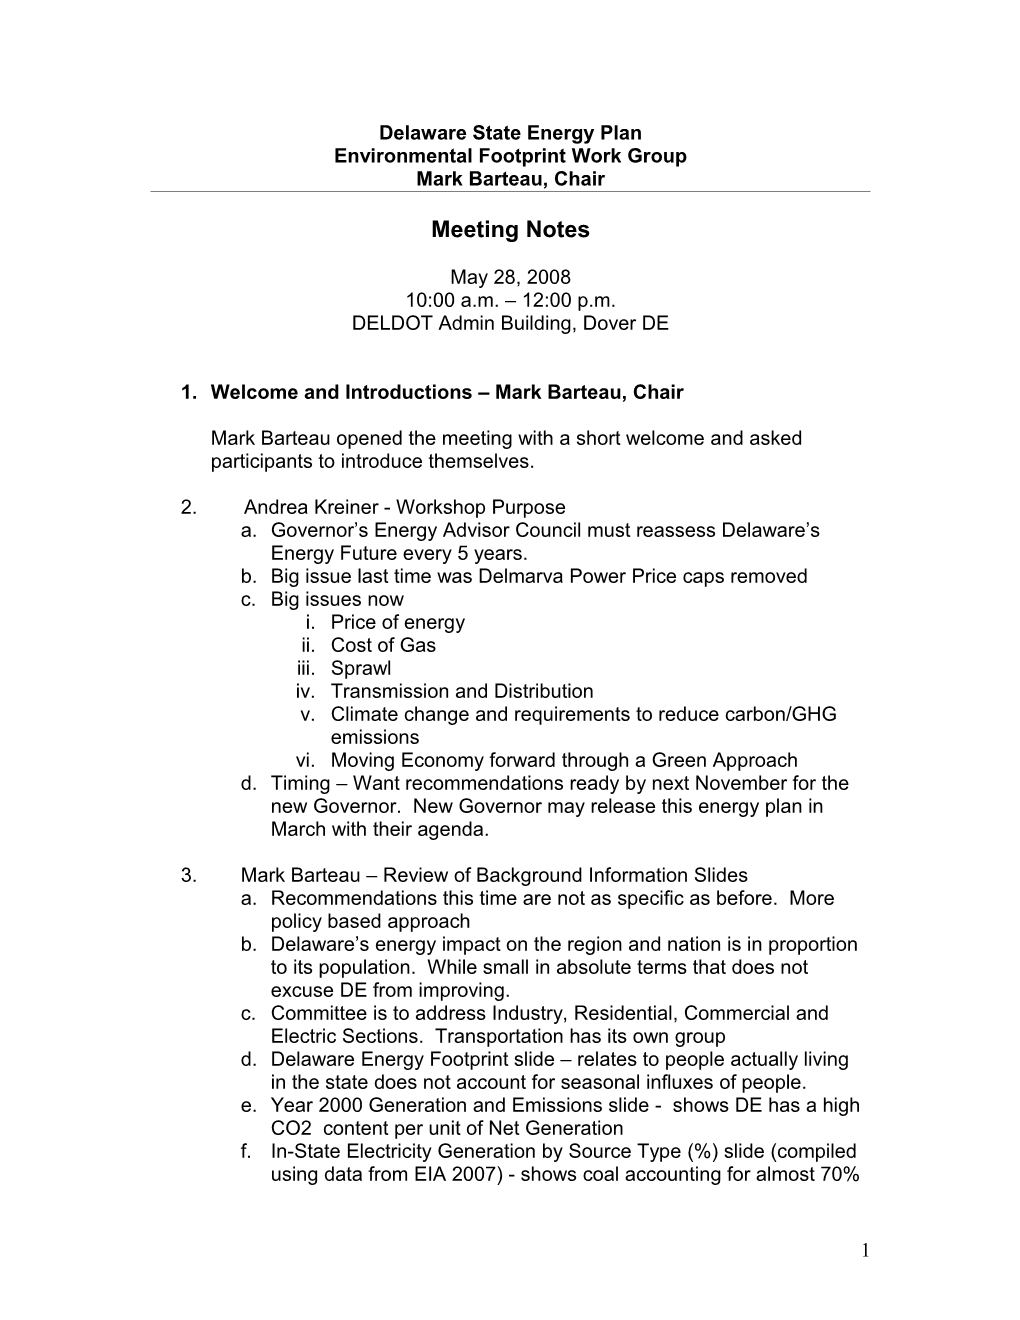 Transmission-Distribution Working Group Agenda May 15, 2008